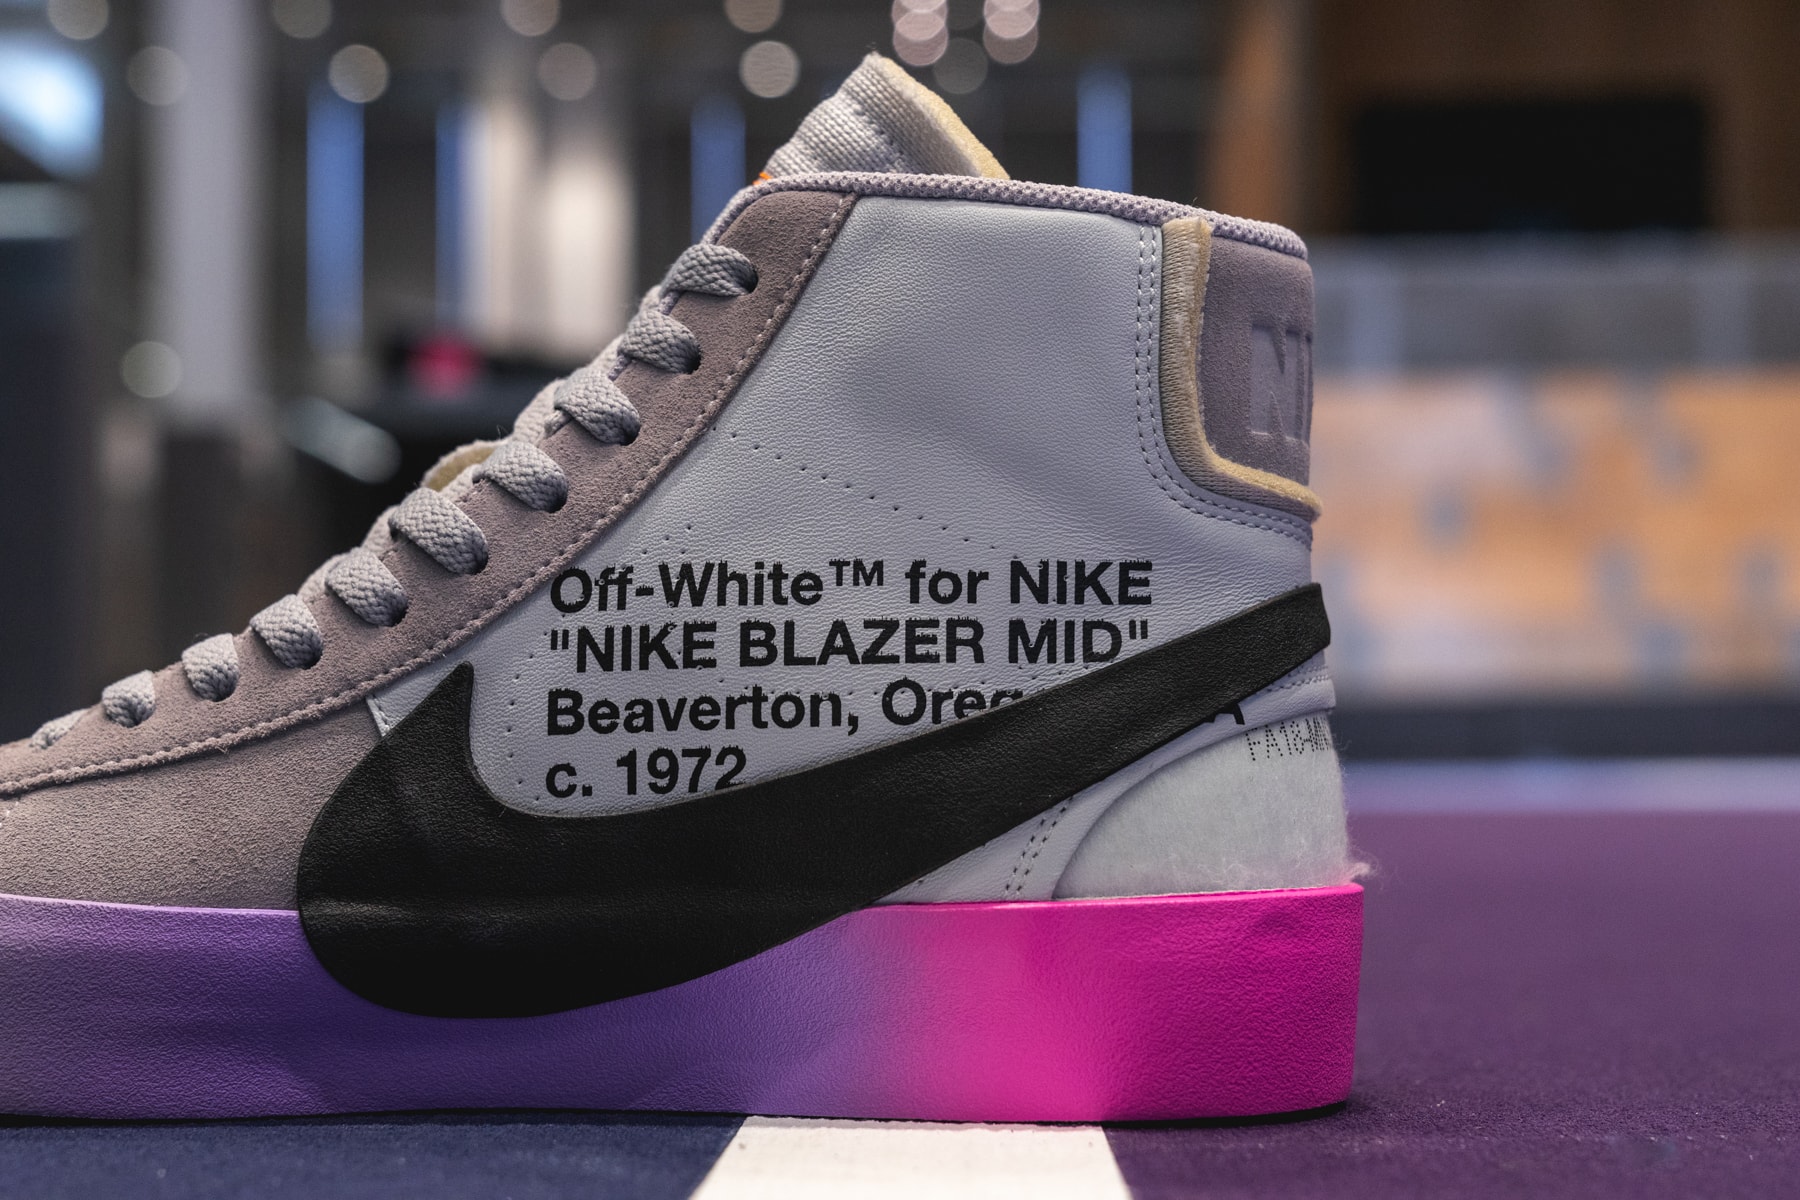 Off-White™ Nike Serena Williams "QUEEN" Air Max 97 Blazer NikeCourt Flare 2